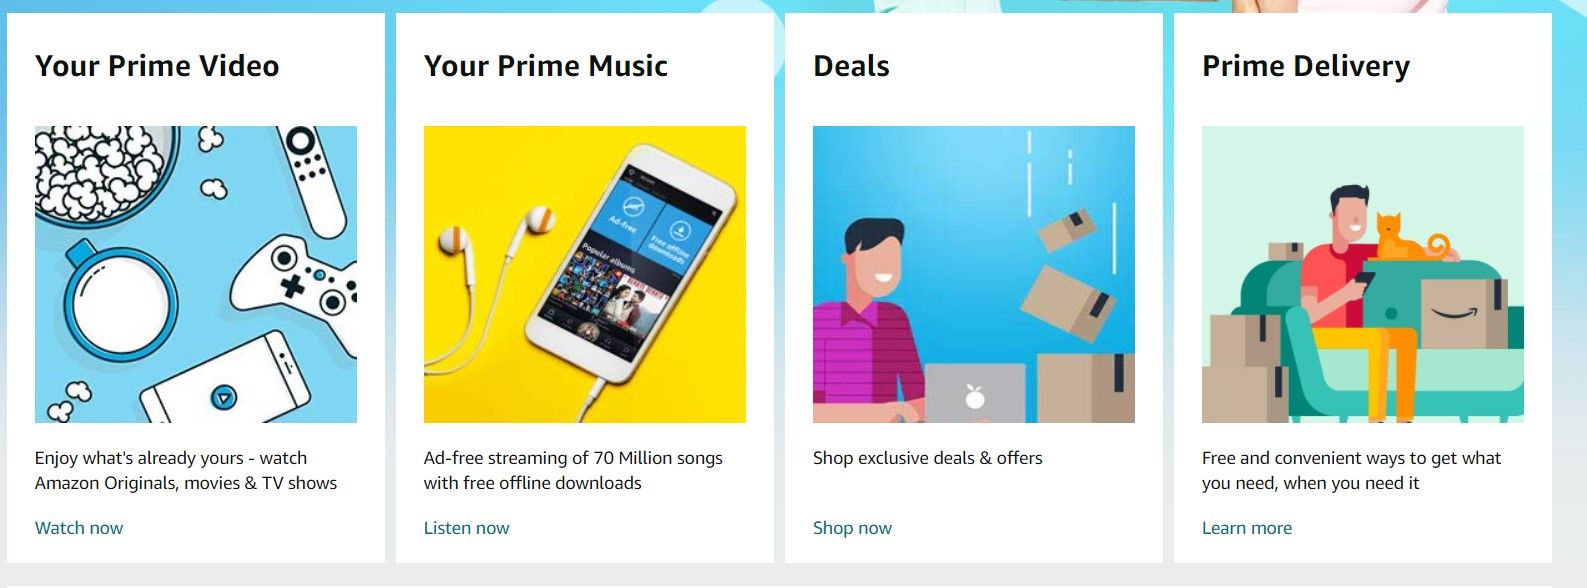 Amazon Prime Plans 2021 Membership Price, Prime Video Mobile Edition